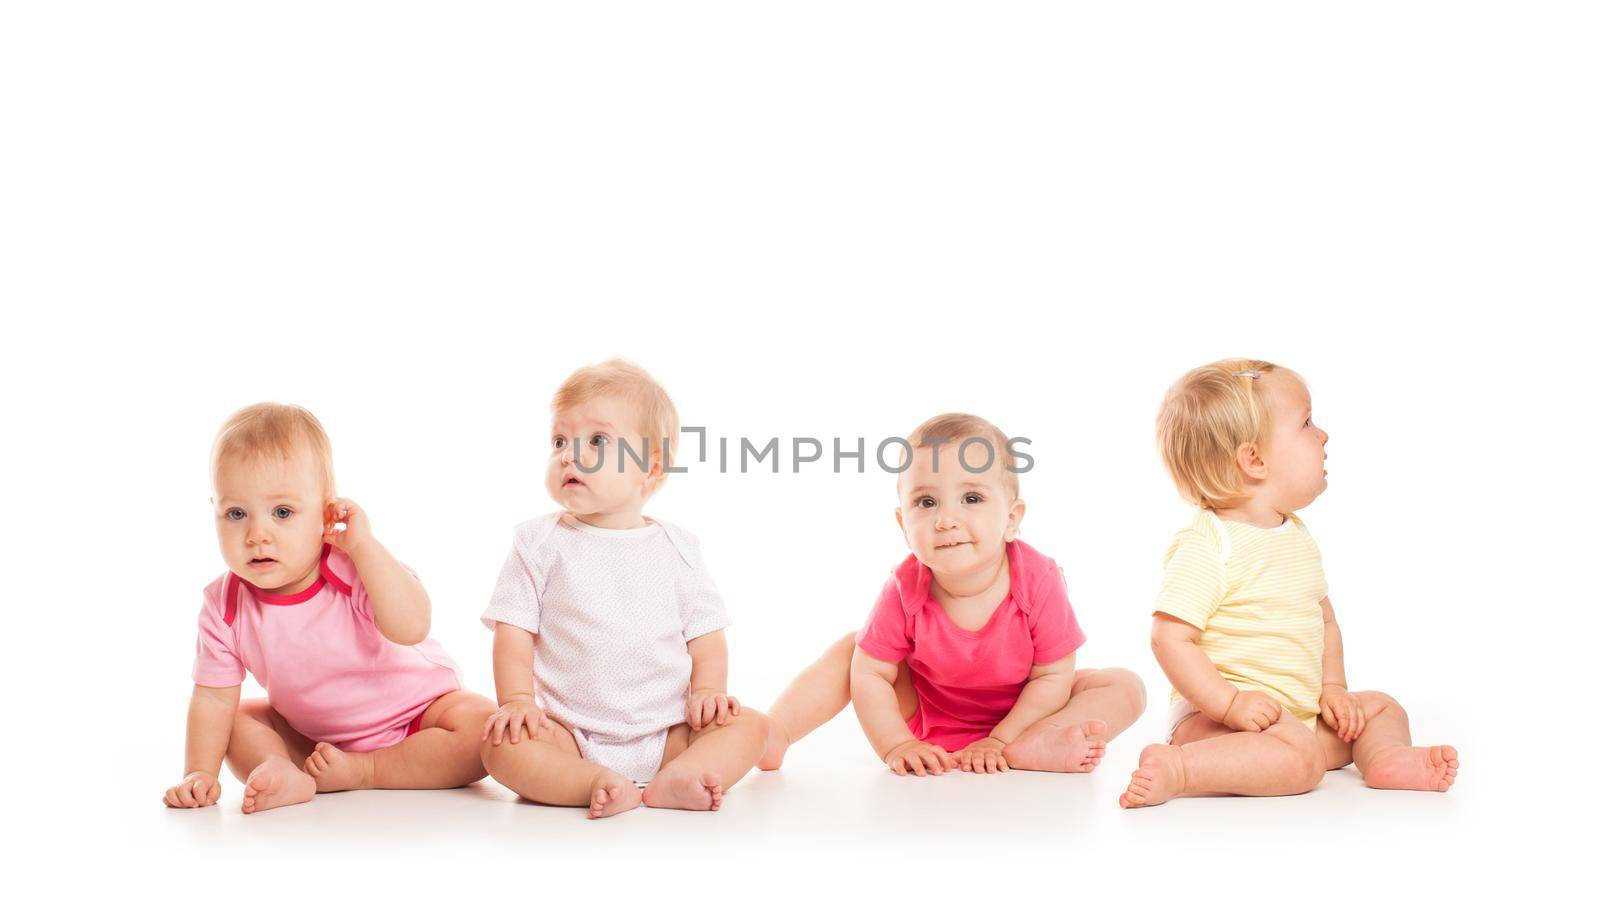 Four babies isolated isolated on white background by oksix